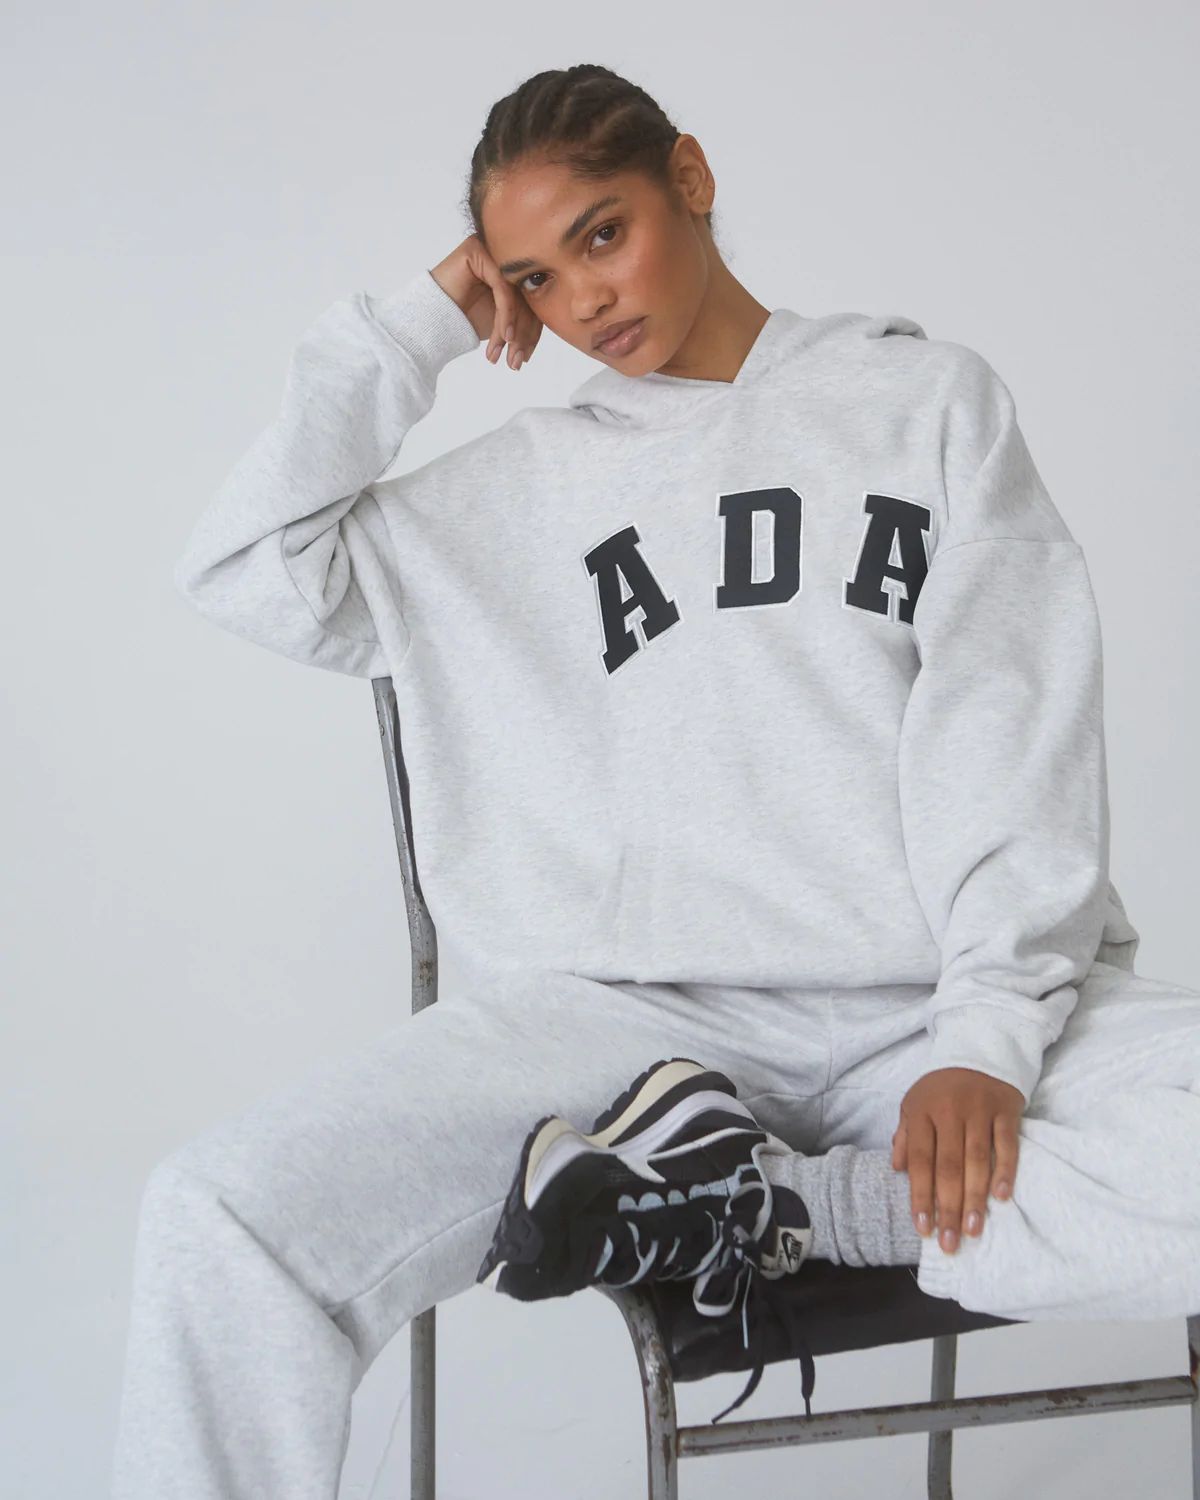 ADA Oversized Hoodie - Light Grey Melange | Adanola UK